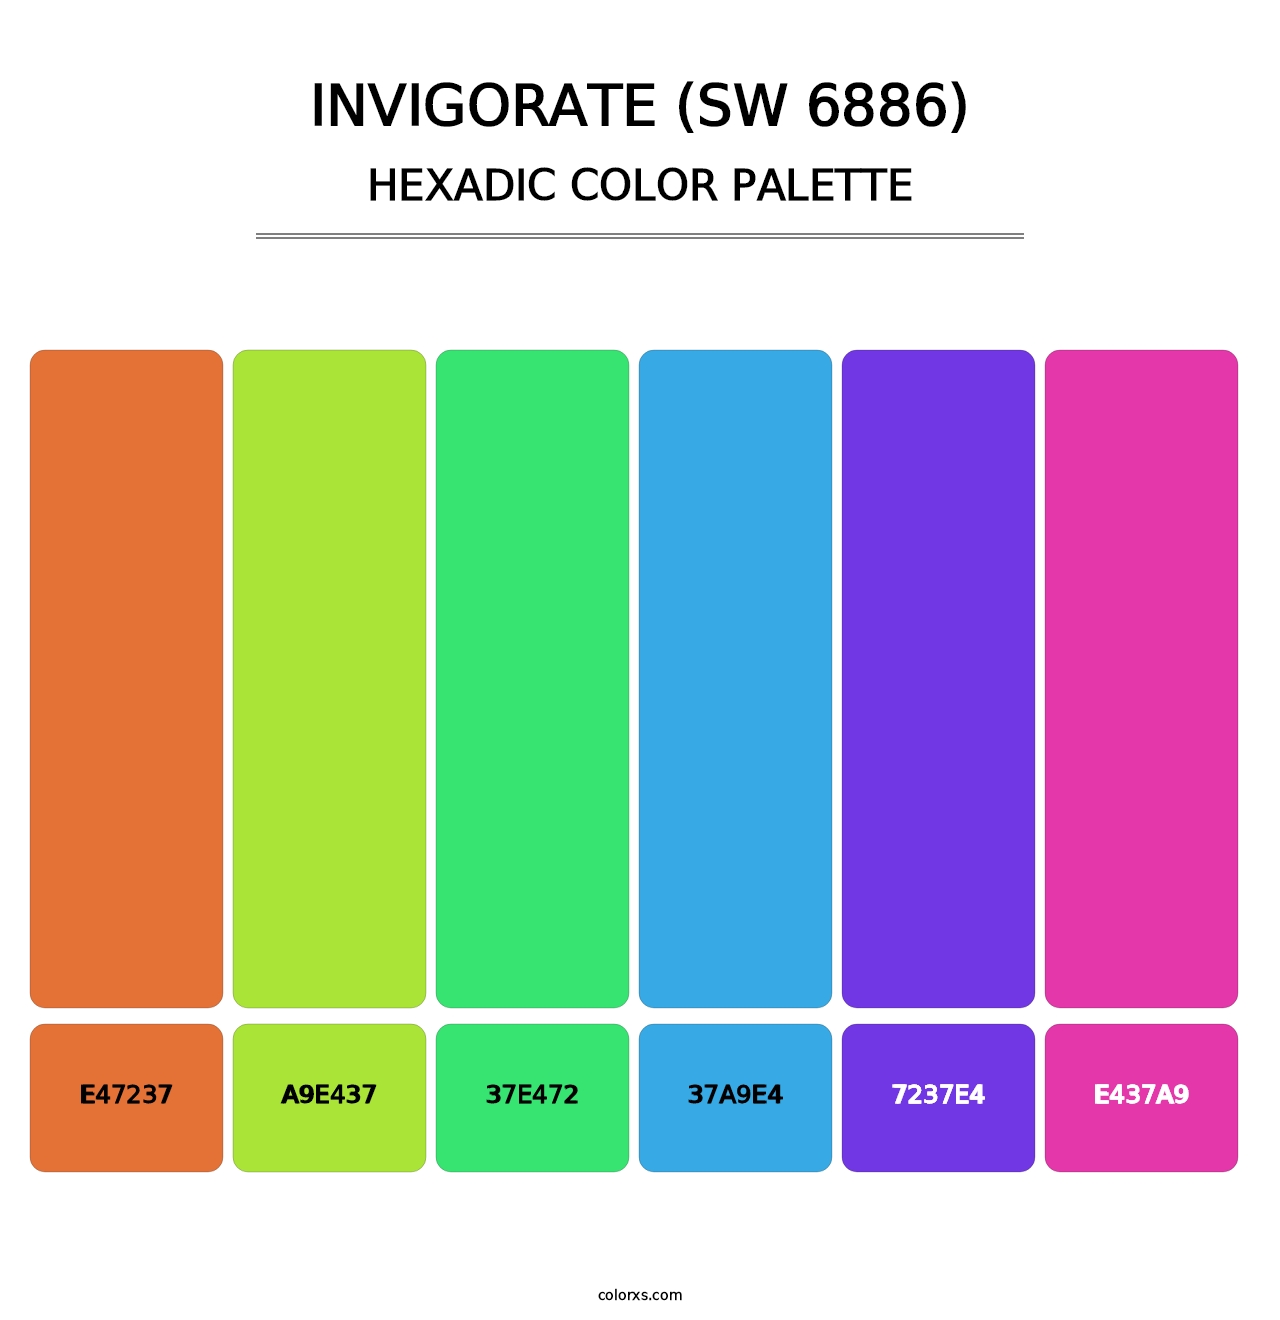 Invigorate (SW 6886) - Hexadic Color Palette